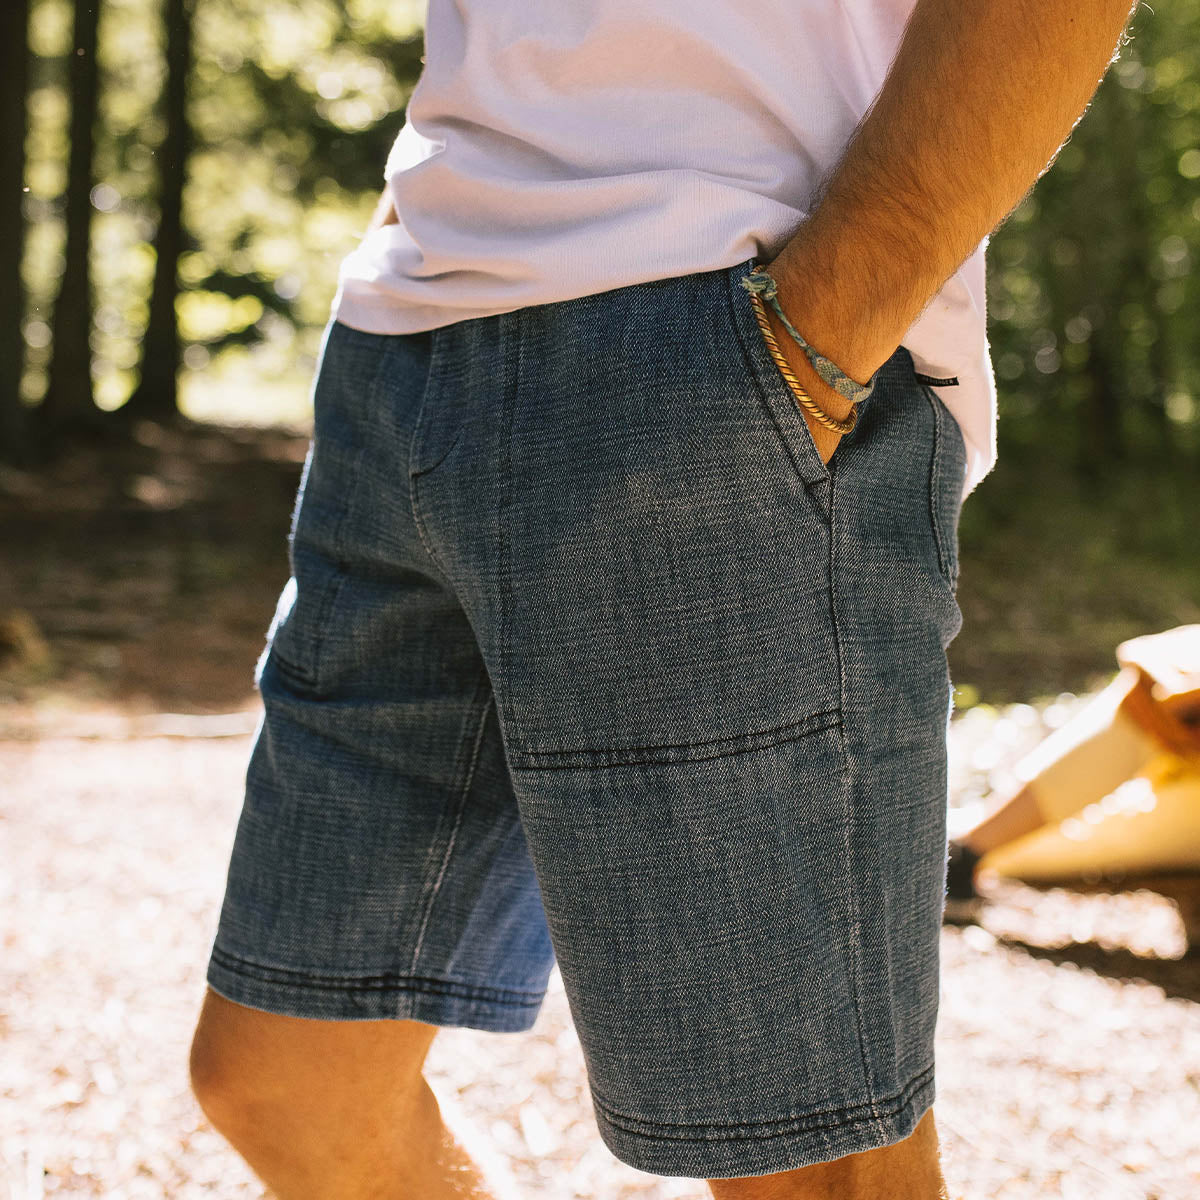 Pine Organic Cotton Cord Shorts - Washed Denim